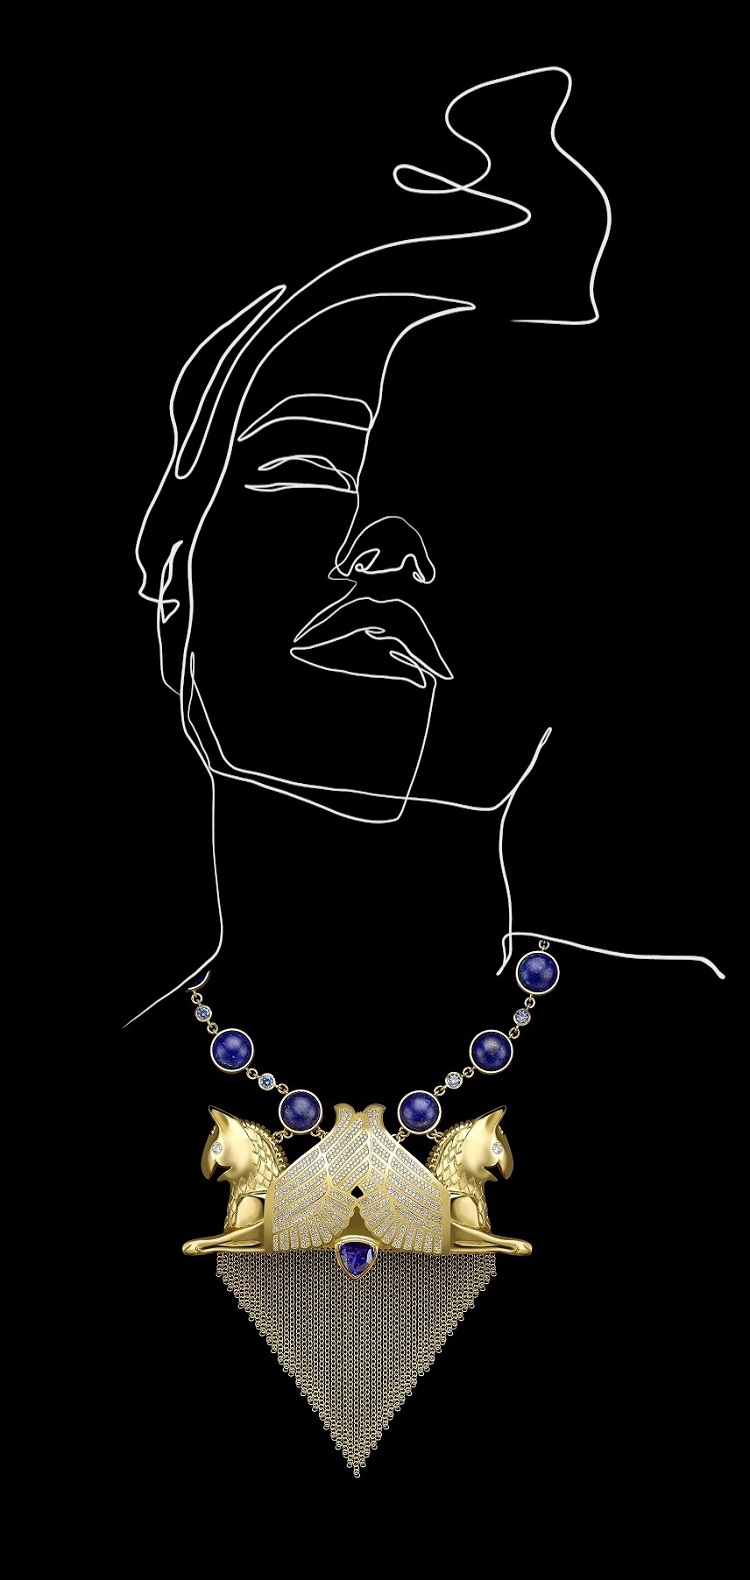 persepolis griffin necklace size illustration